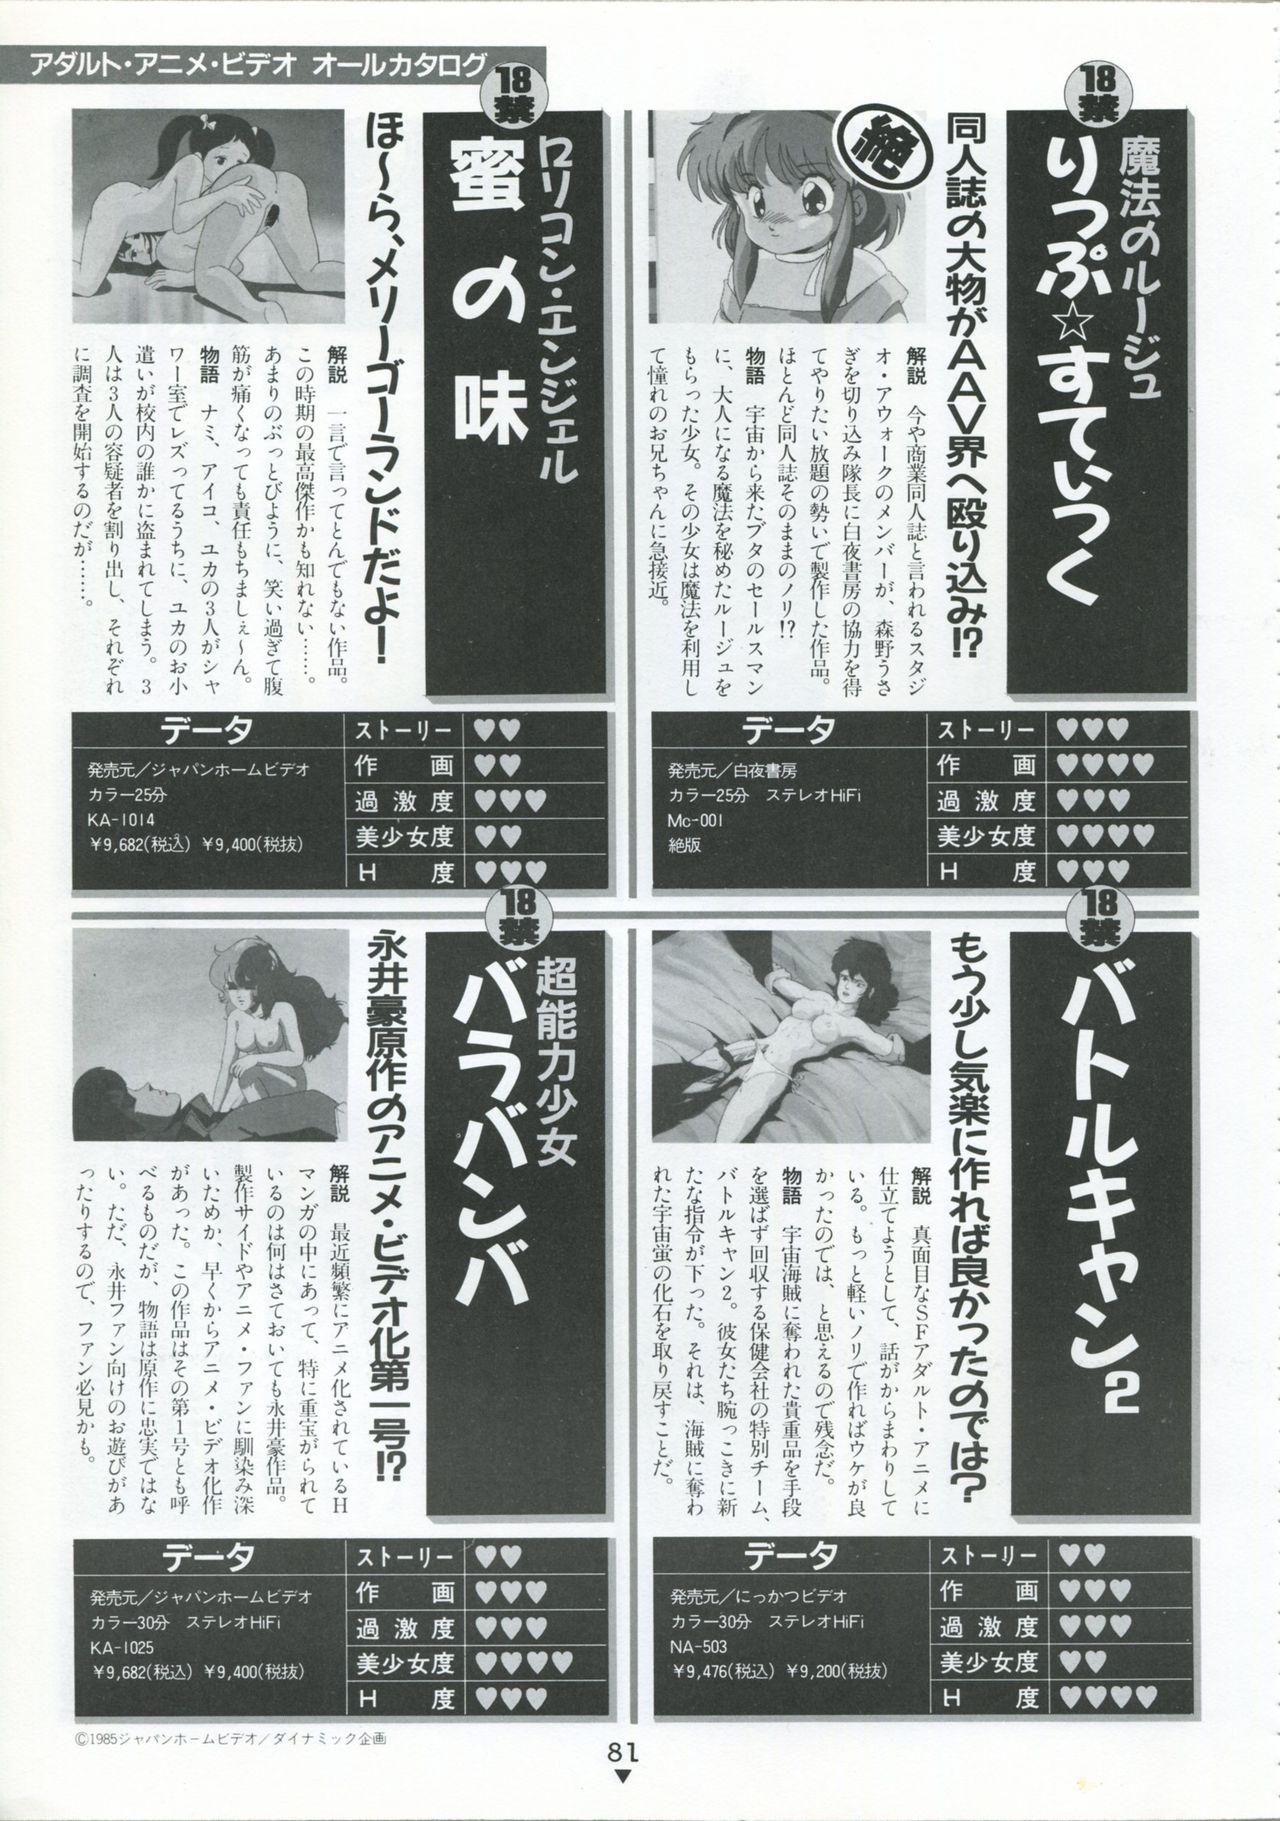 Bishoujo Anime Daizenshuu - Adult Animation Video Catalog 1991 76